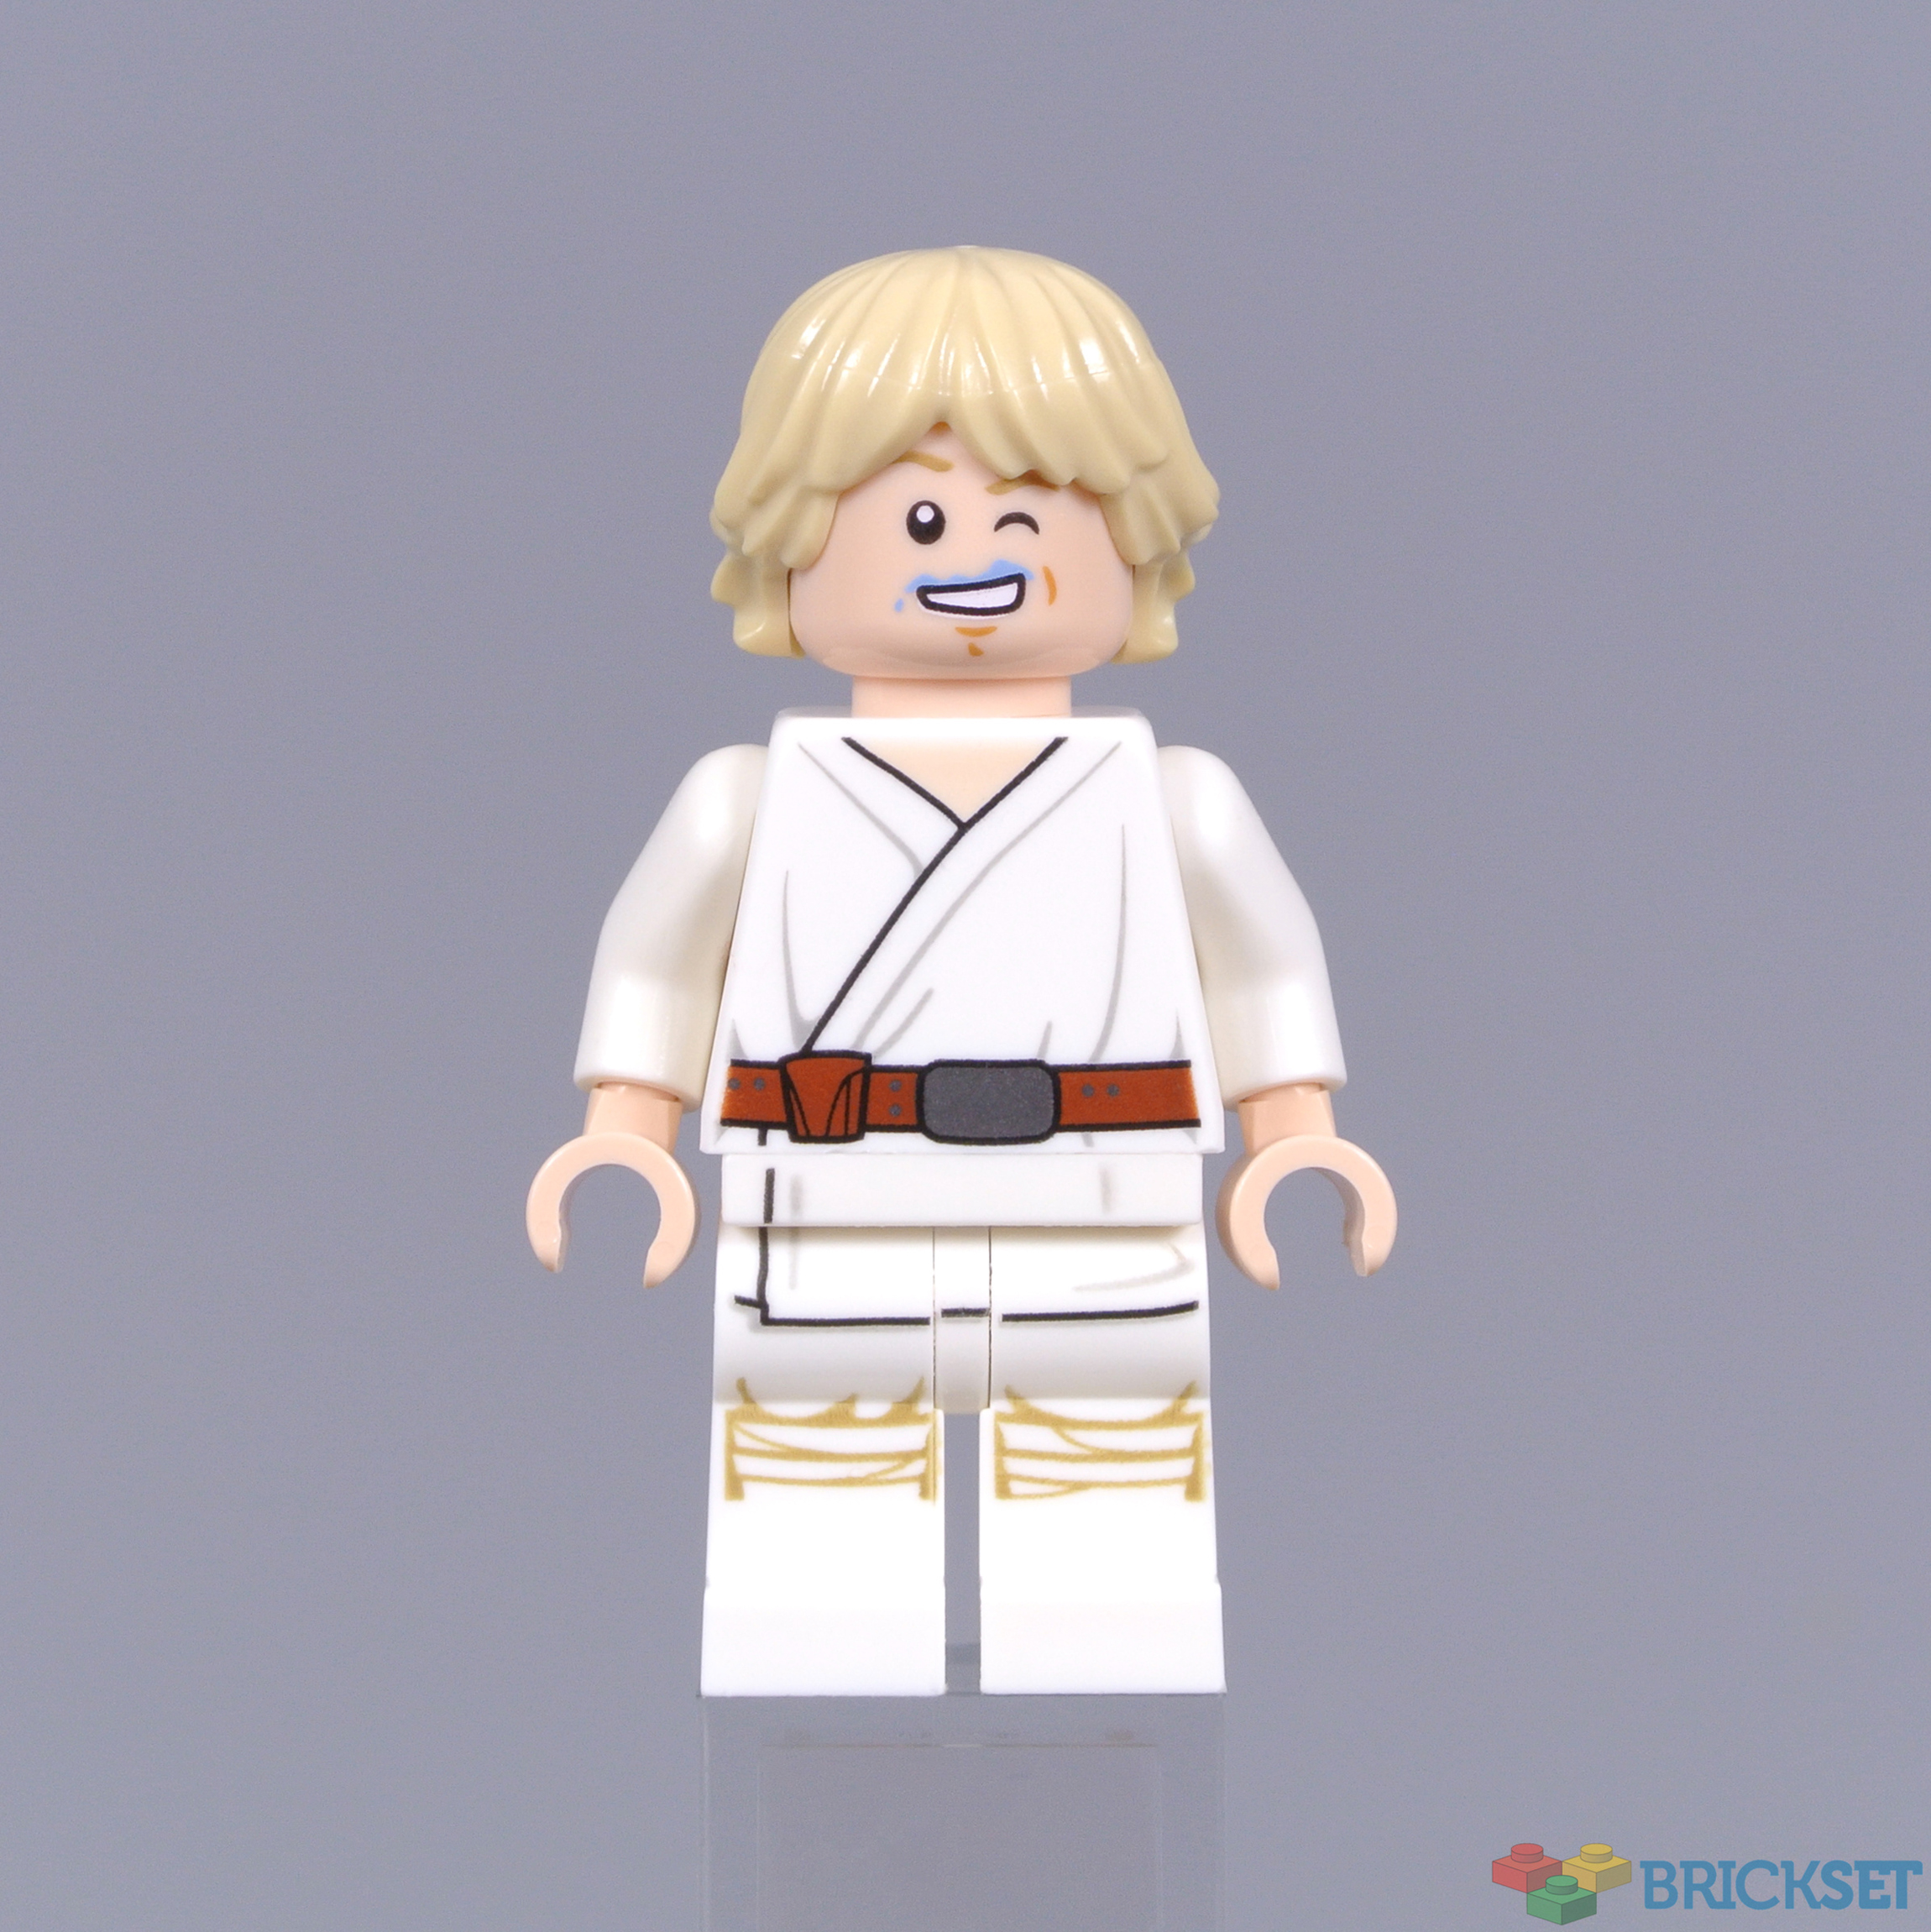 Lego Star Wars Luke Skywalker aus 75052 